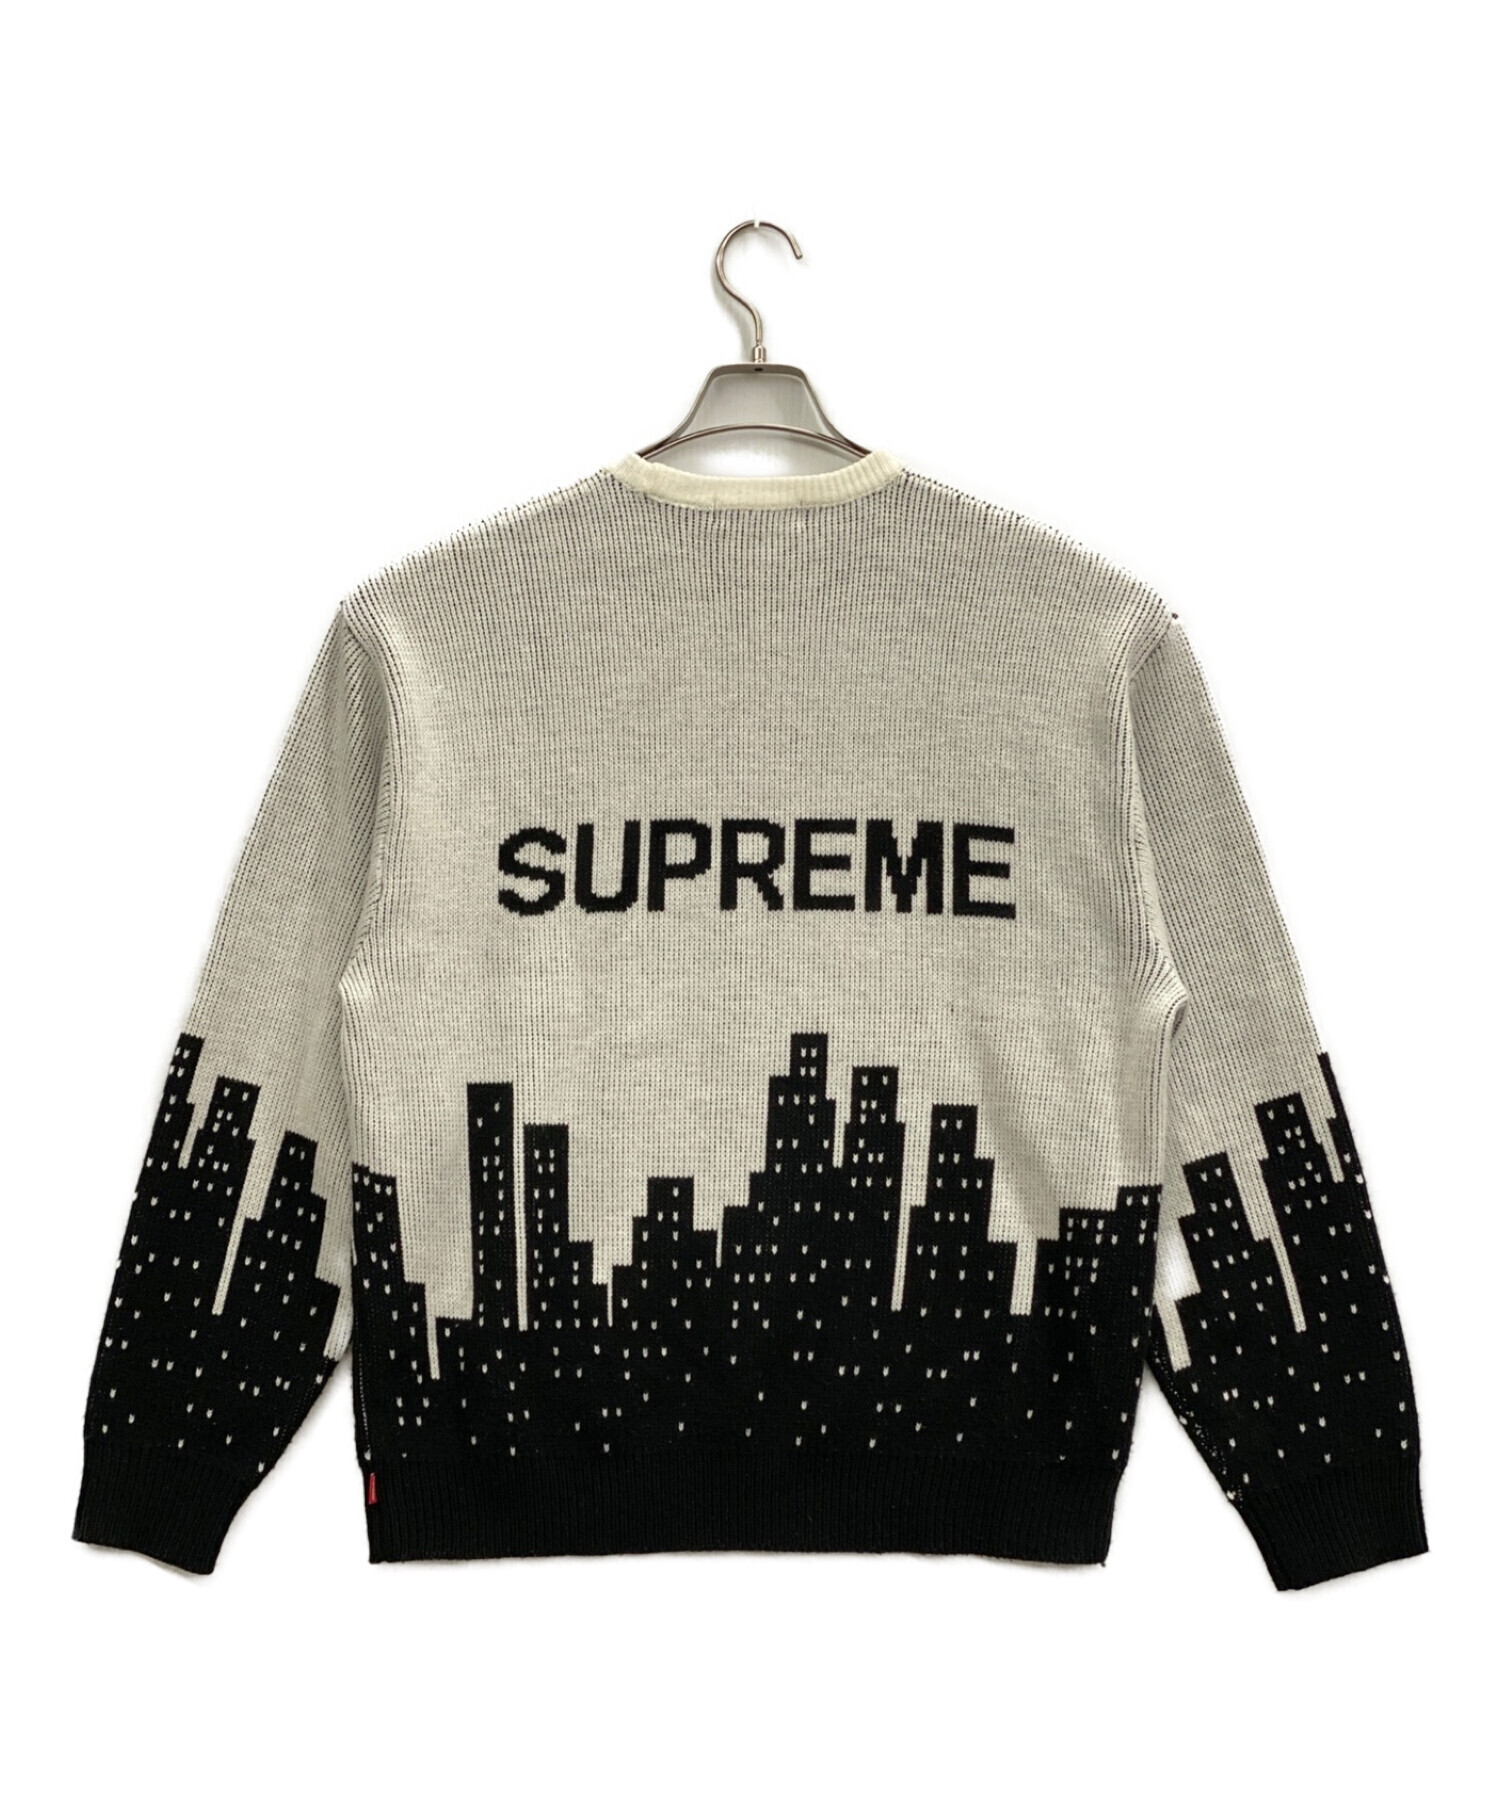 WhiteSIZENew York Sweater supreme サイズL - ニット/セーター